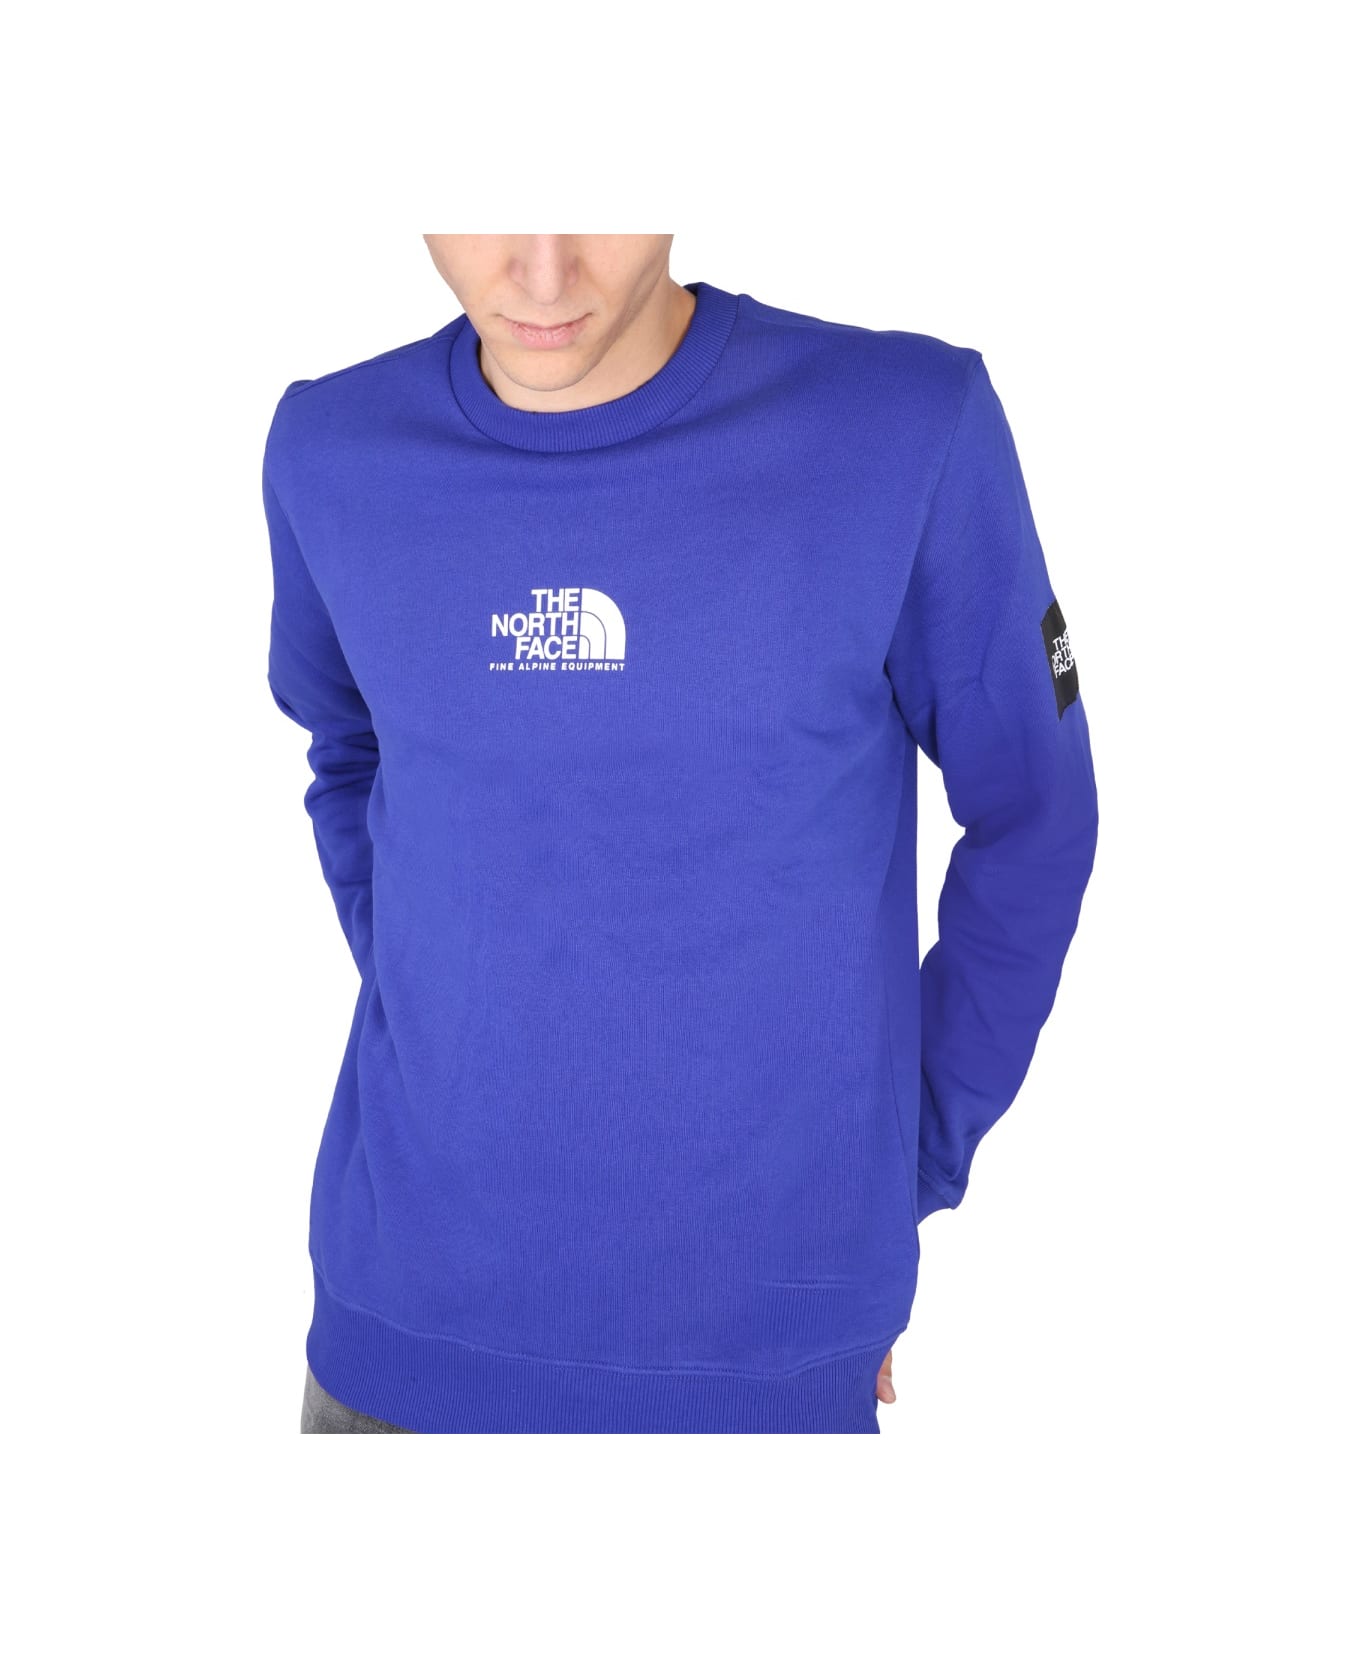 The North Face Crewneck Sweatshirt - BLUE